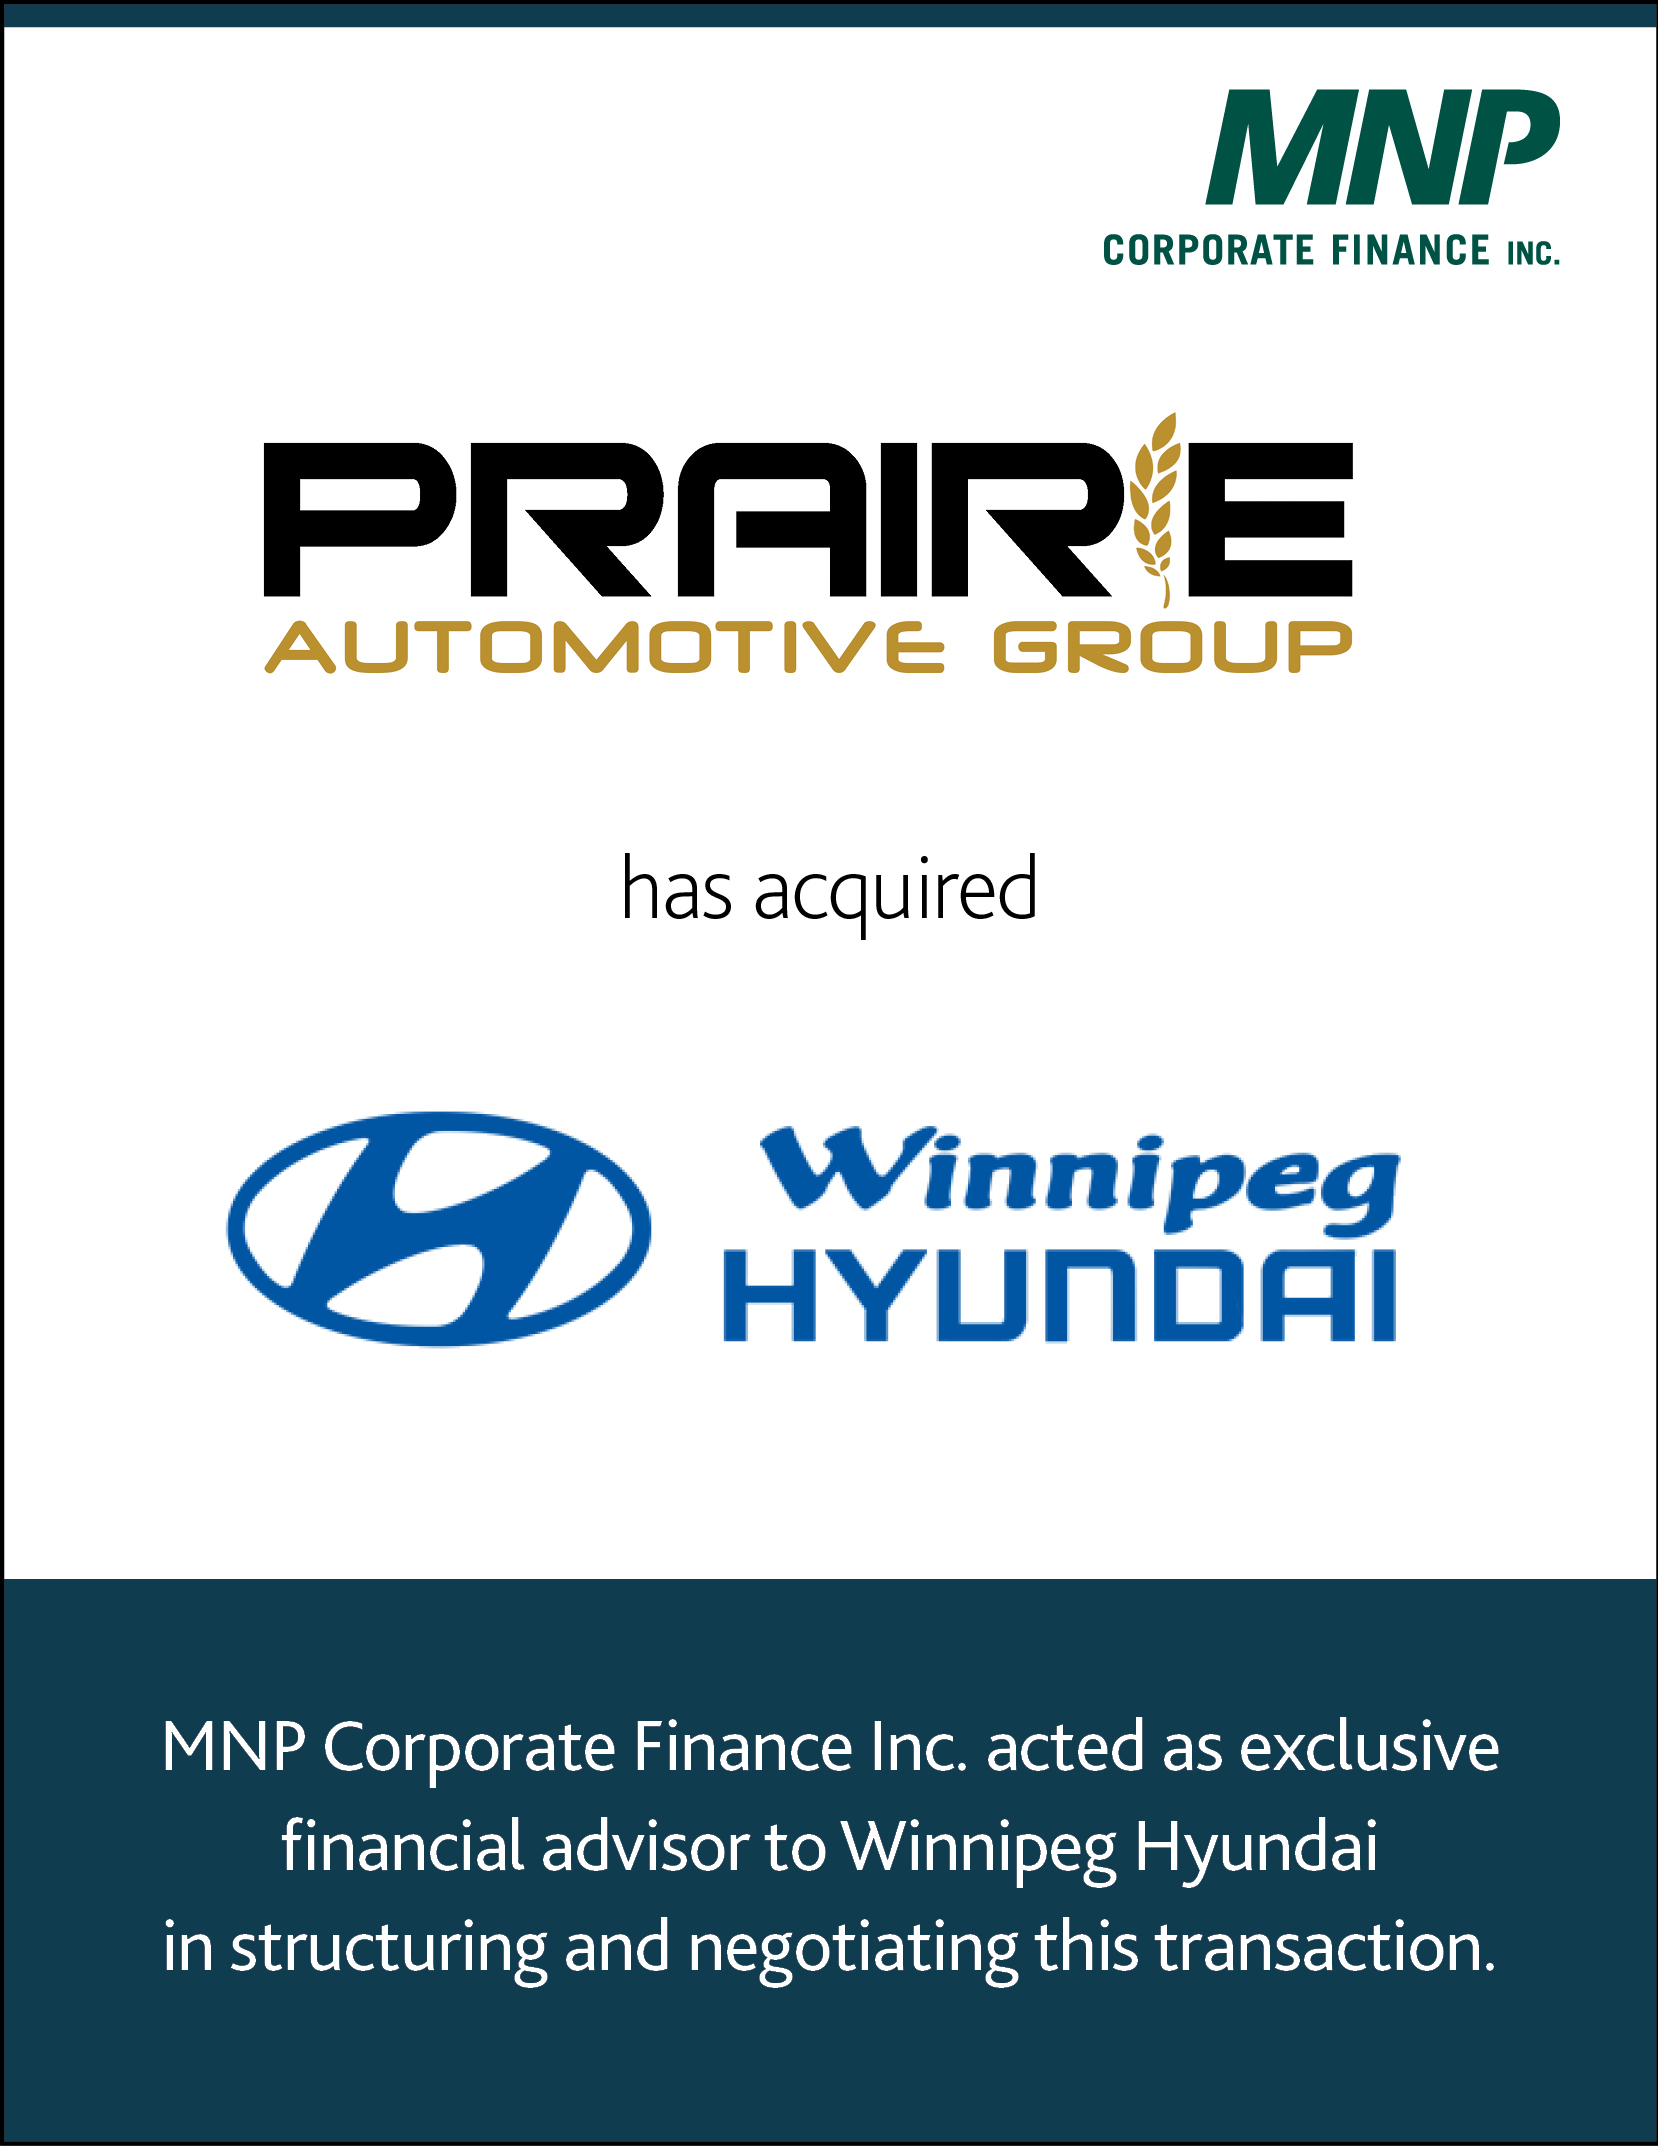 Prairie Automotive Group has acquired Winnipeg Hyundai.